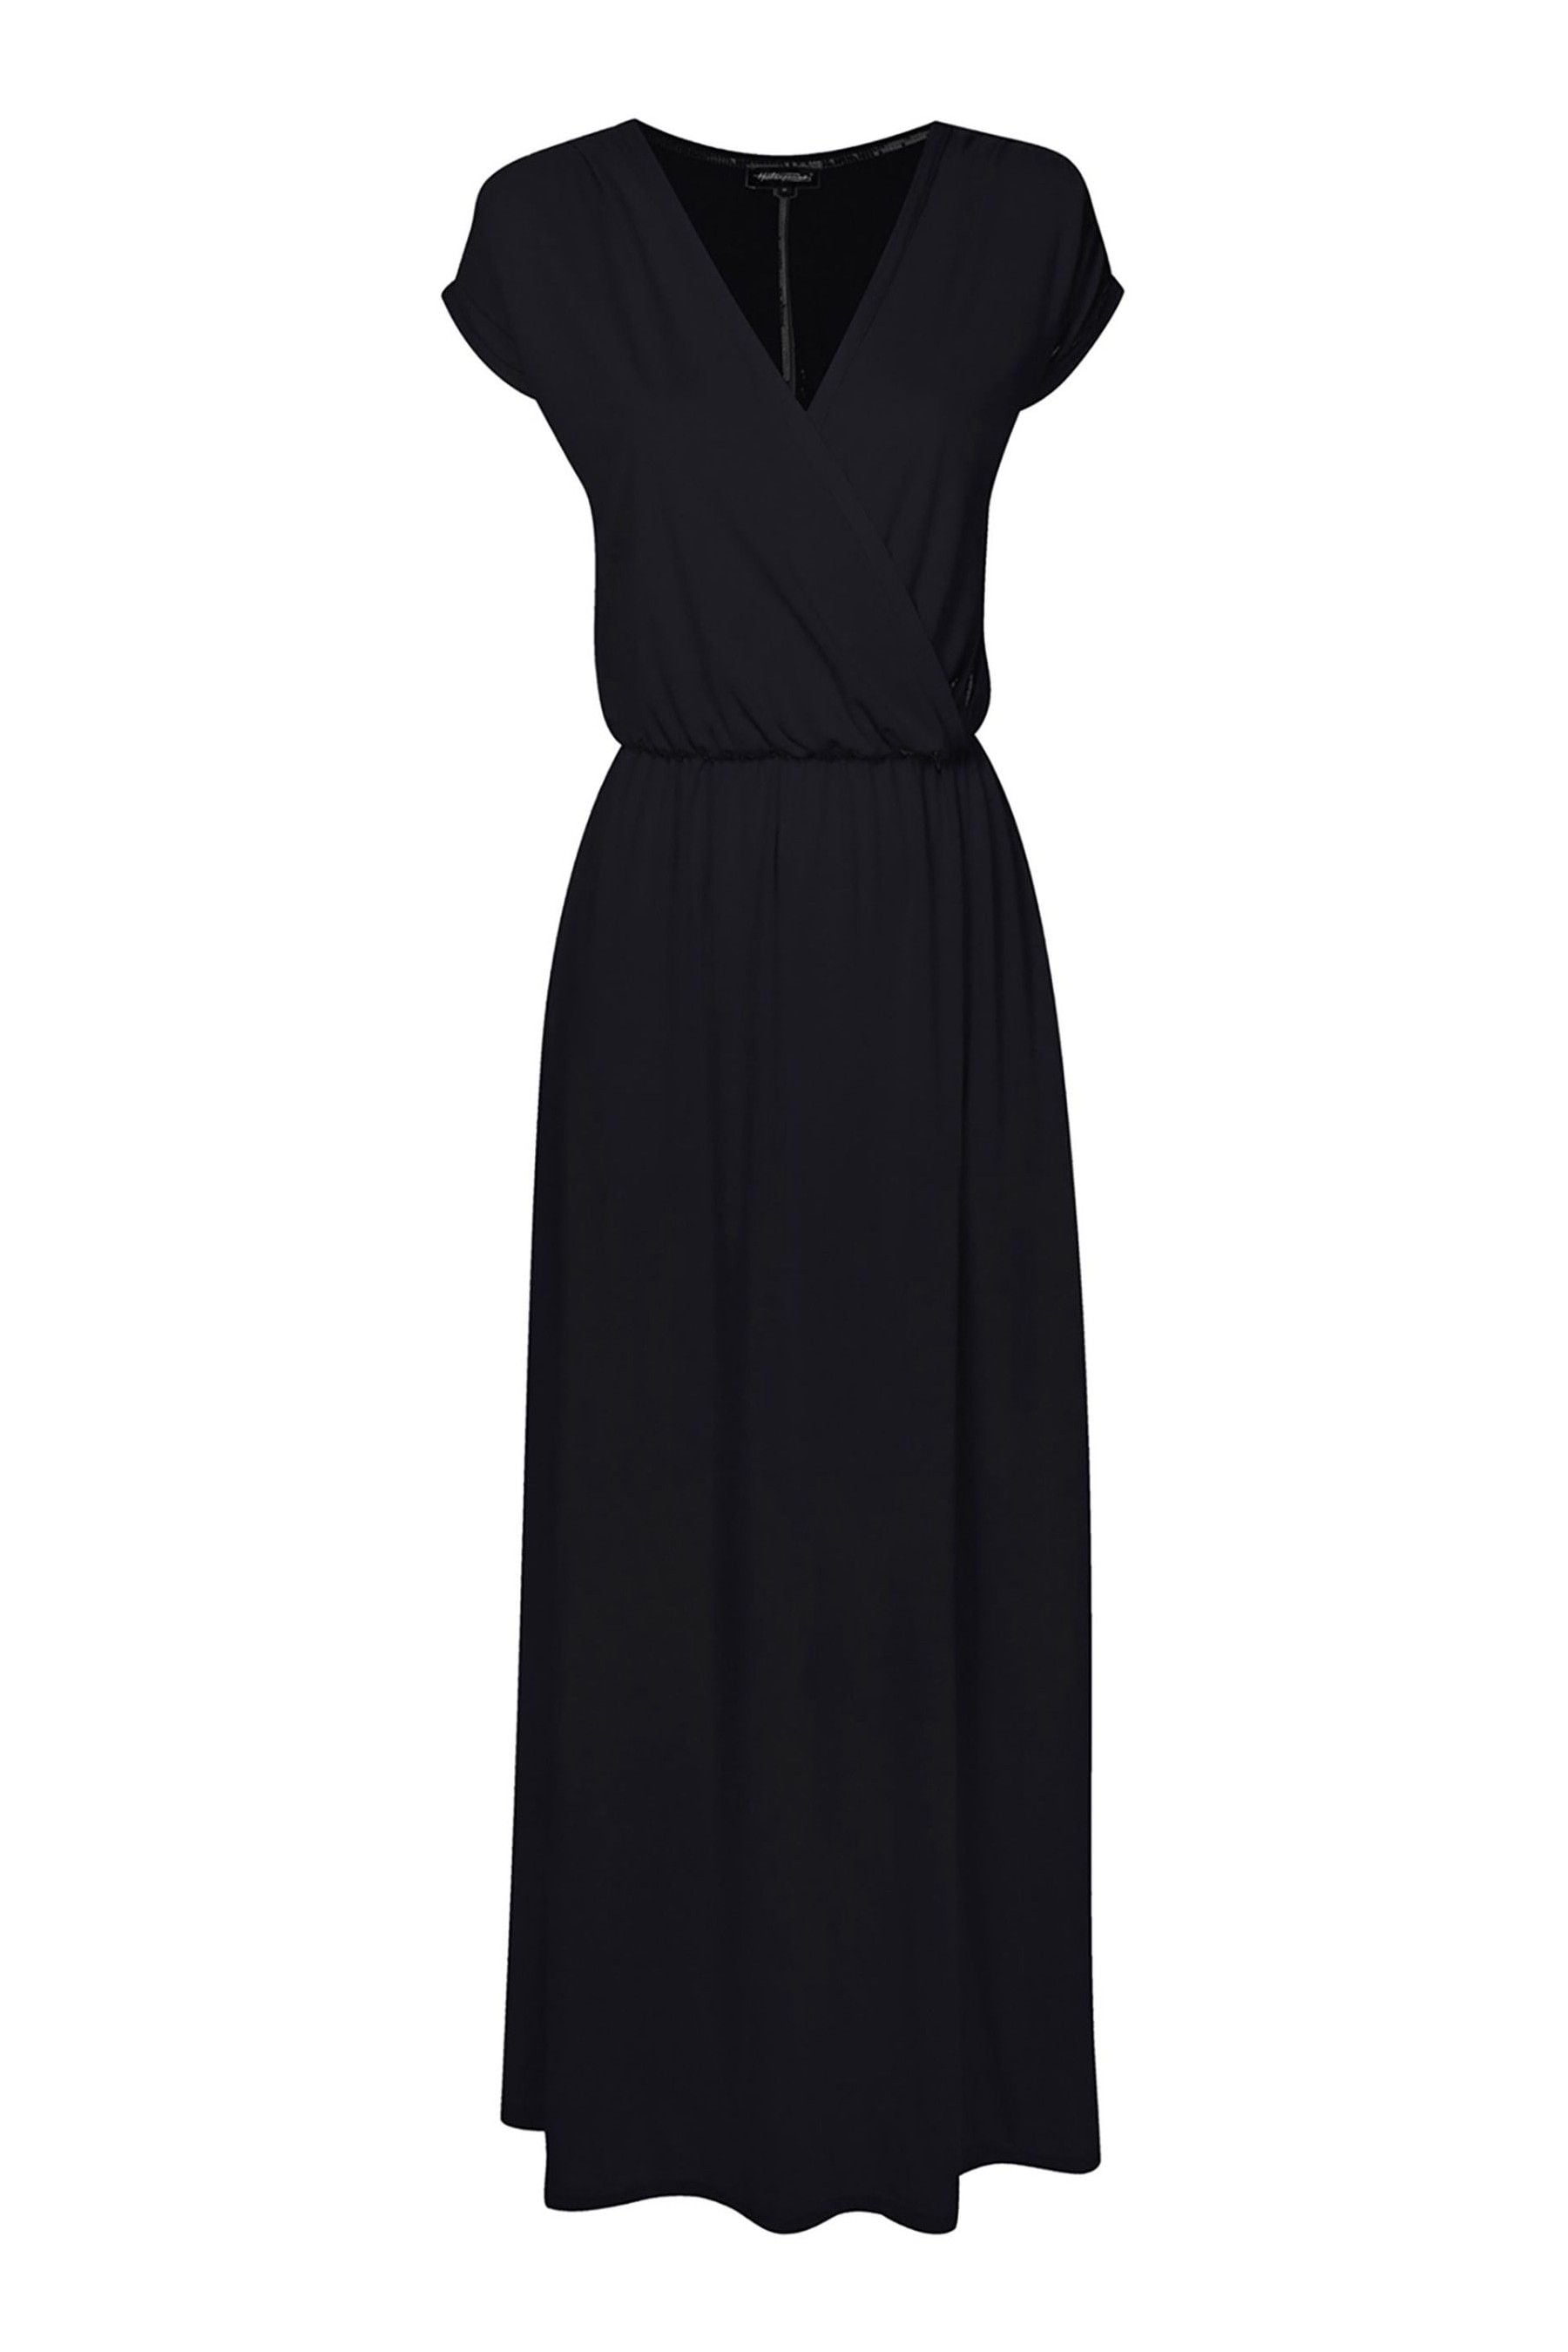 Buy HotSquash Black Maxi Dress from the Next UK online shop